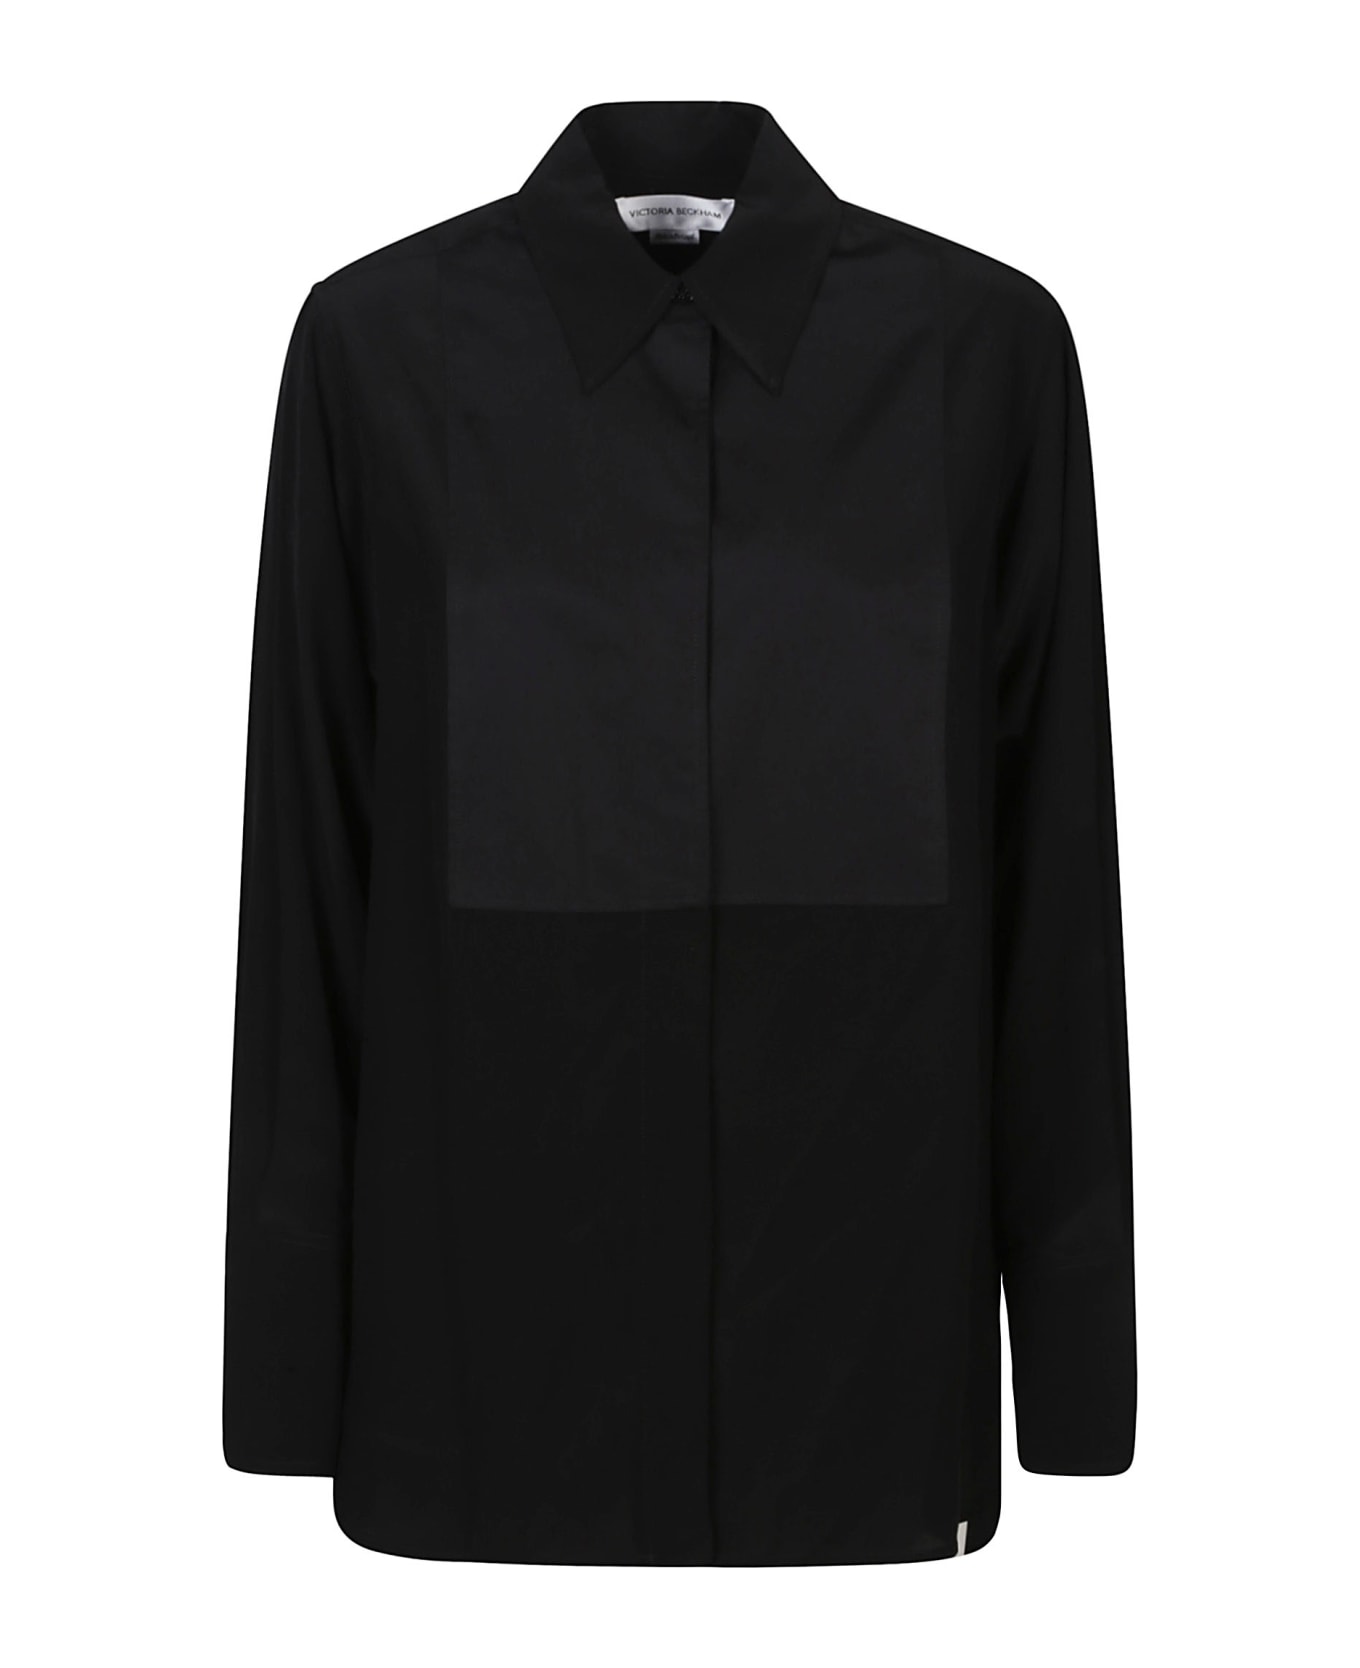 Victoria Beckham Contrast Bib Shirt - Black